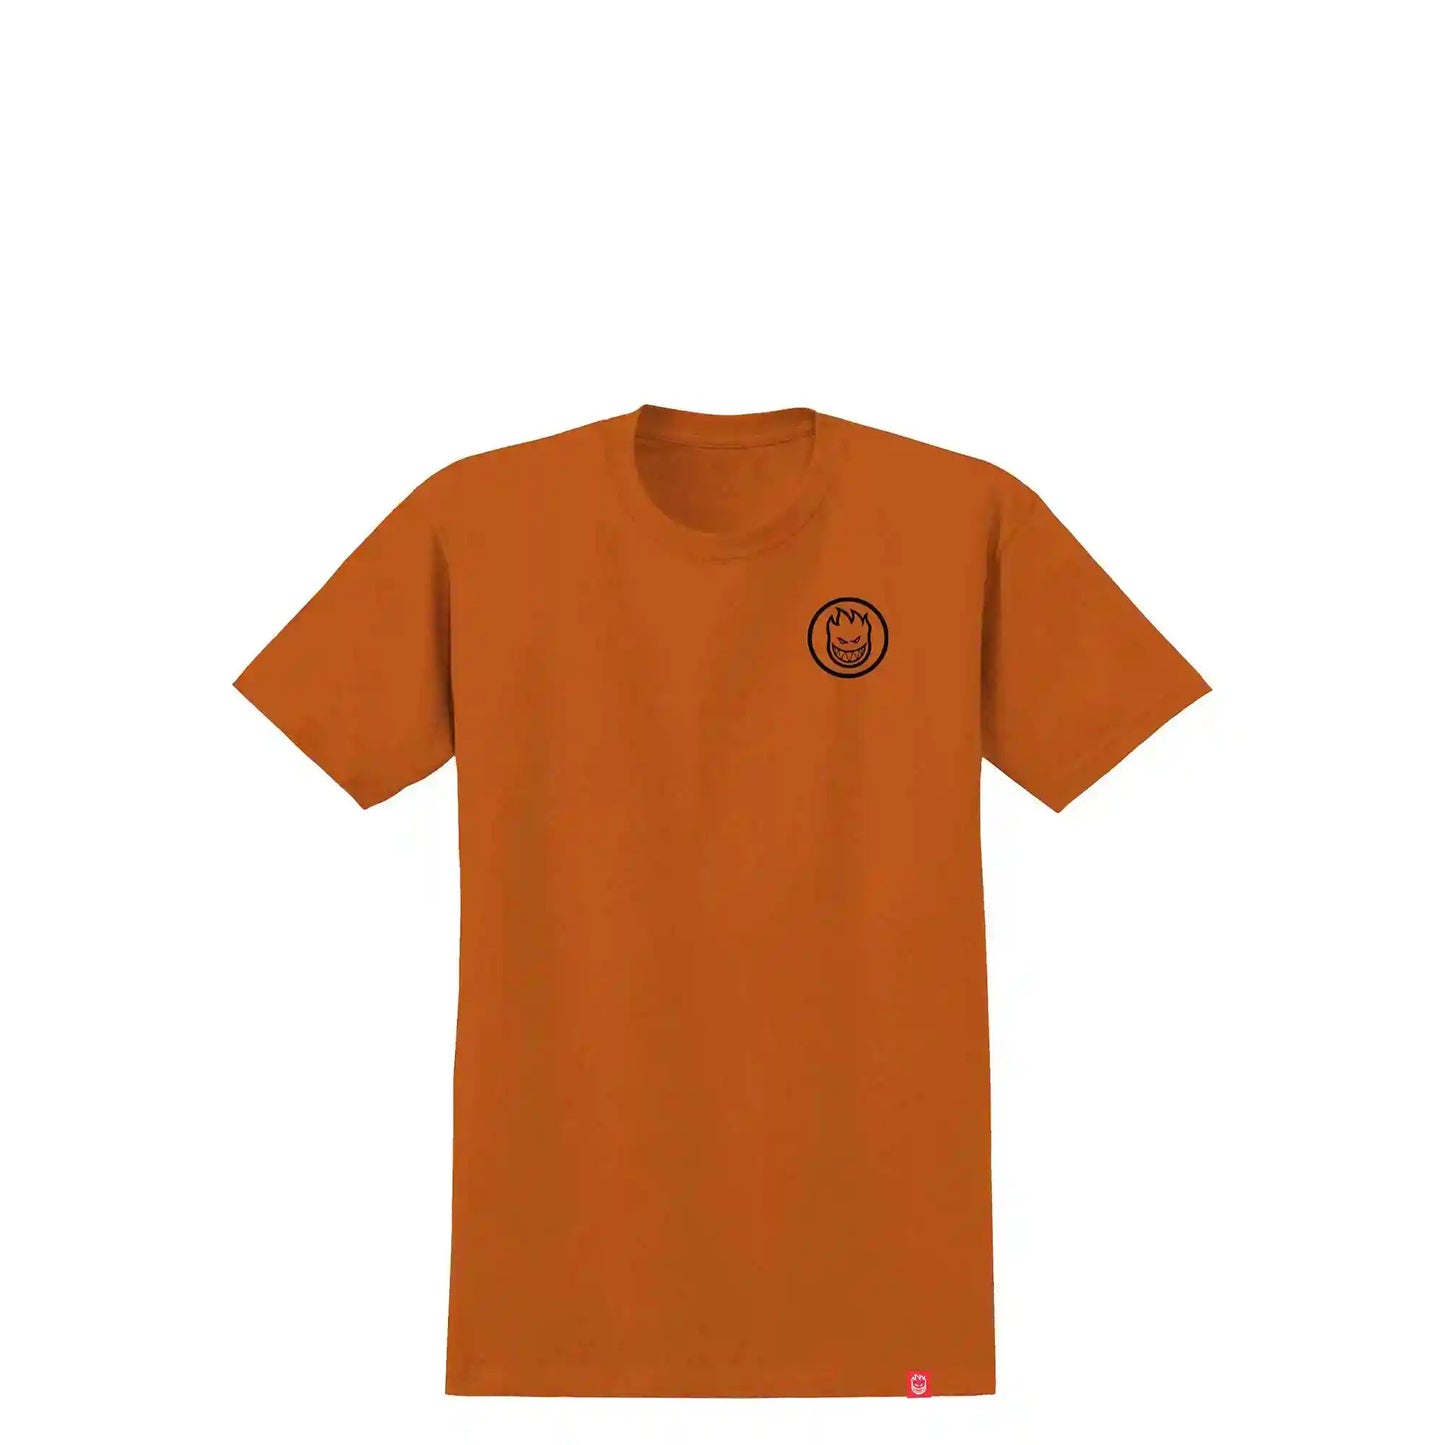 Spitfire Classic Swirl T-Shirt, t. orange w black prints - Tiki Room Skateboards - 2